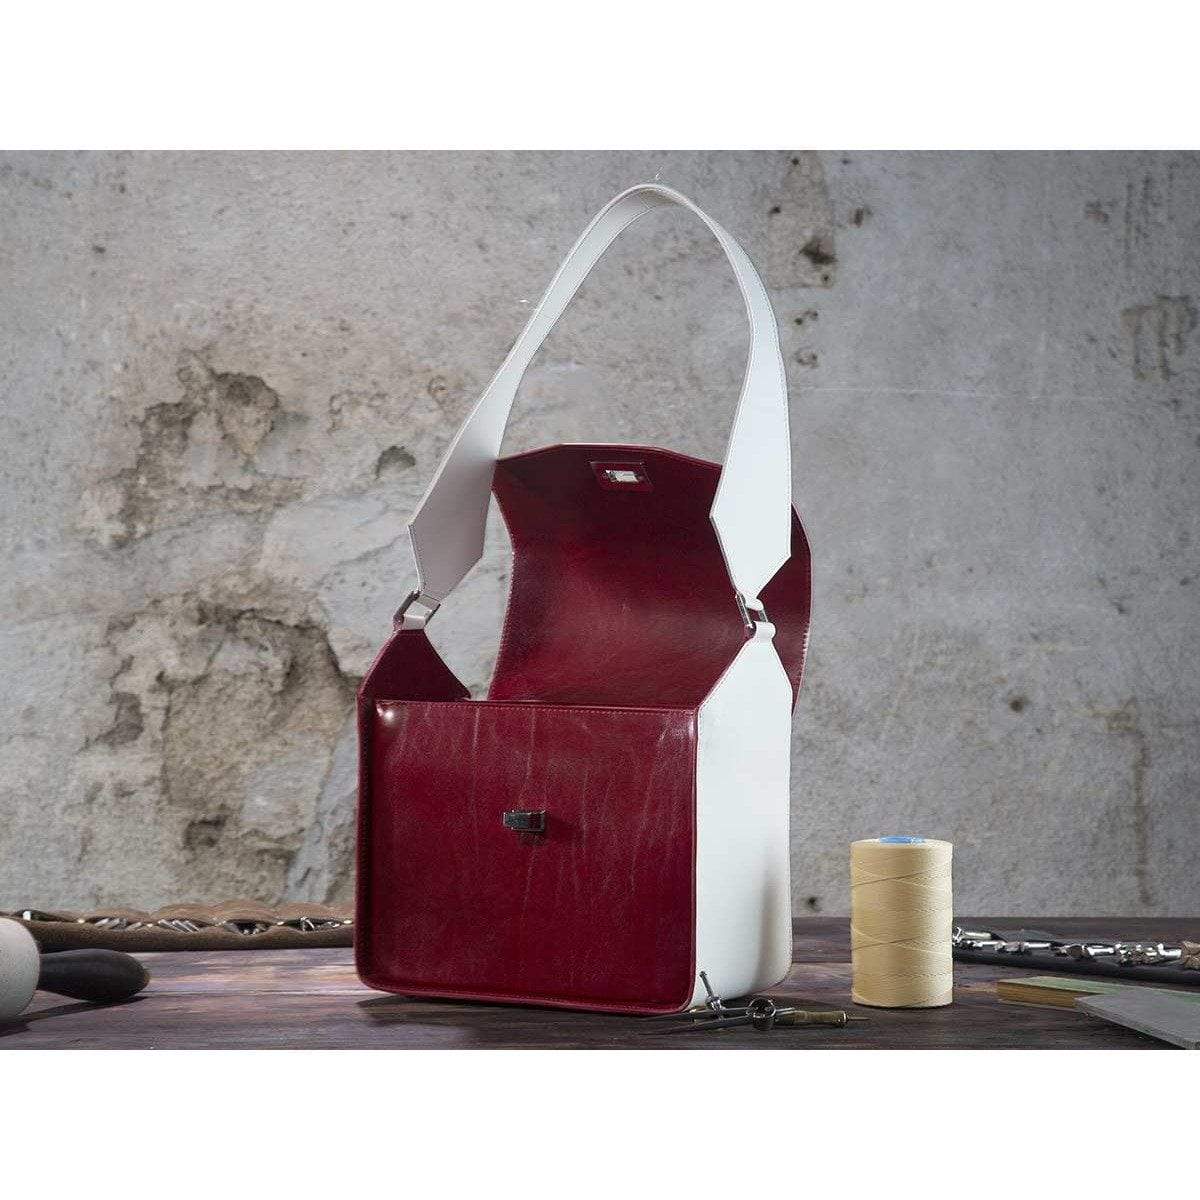 Constancia Bags Made in Italy Handbag Shopping and Shoulder Bag